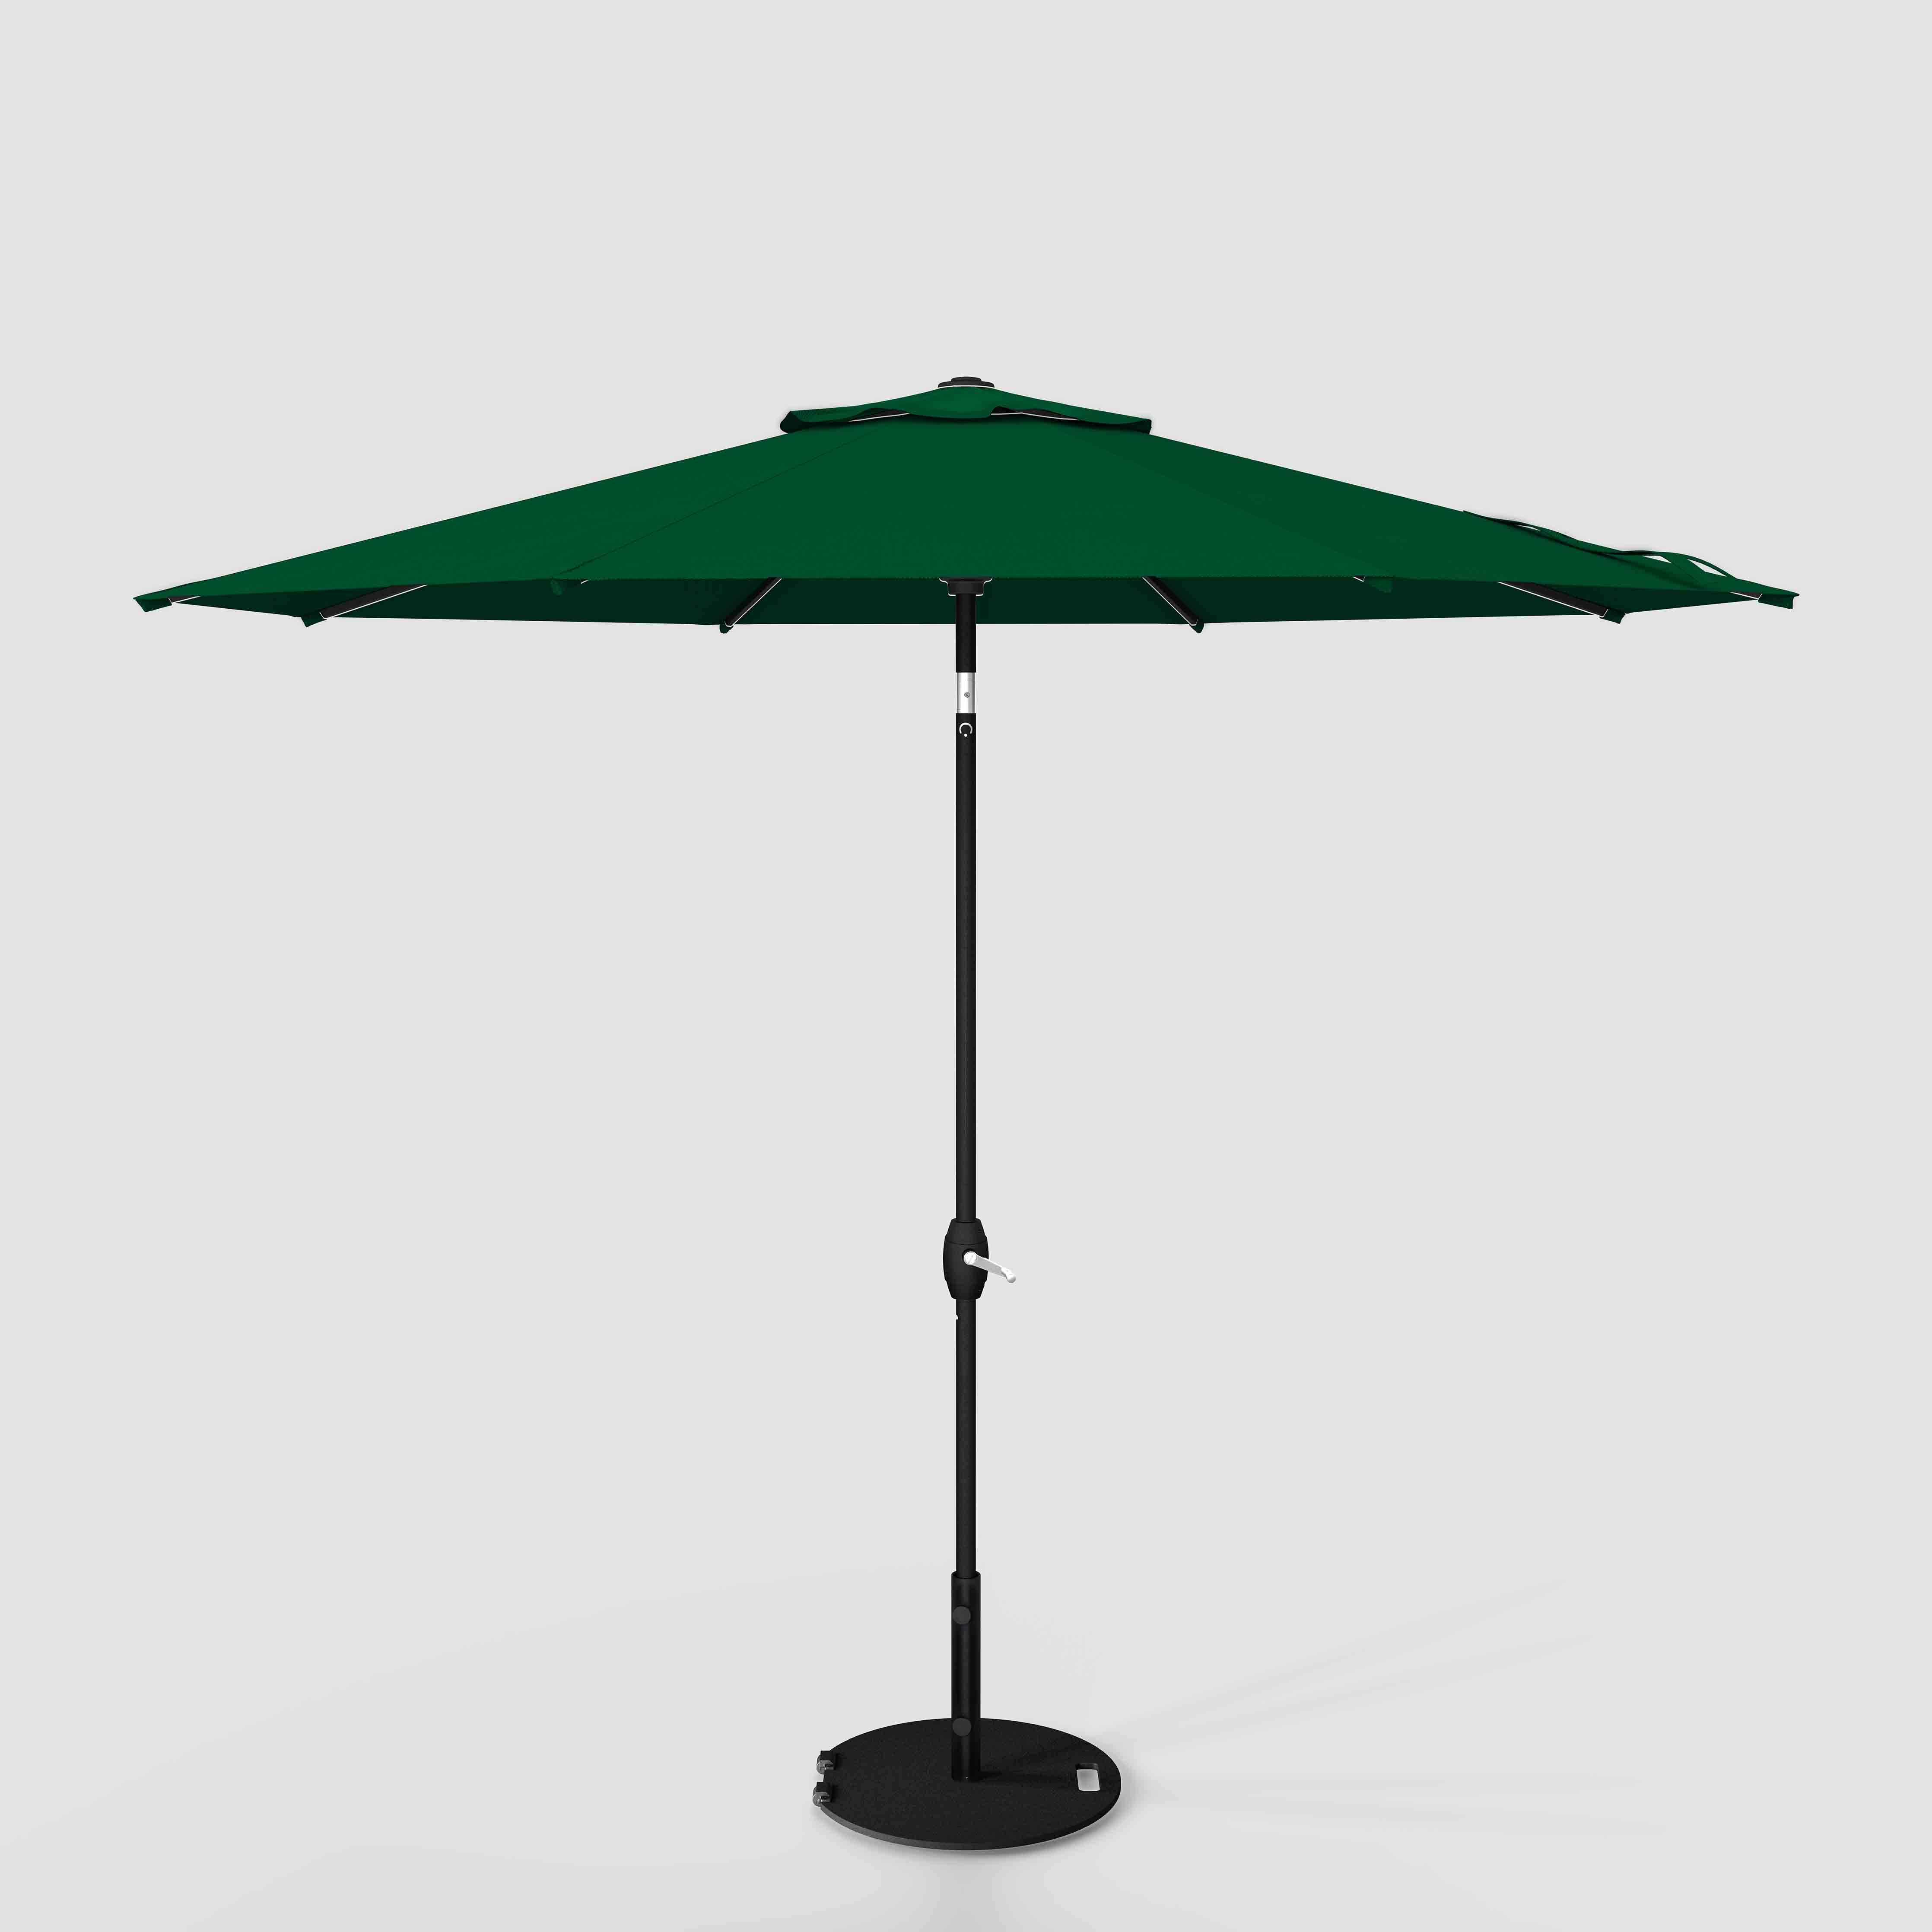 The Lean™ - Sunbrella Forest Green